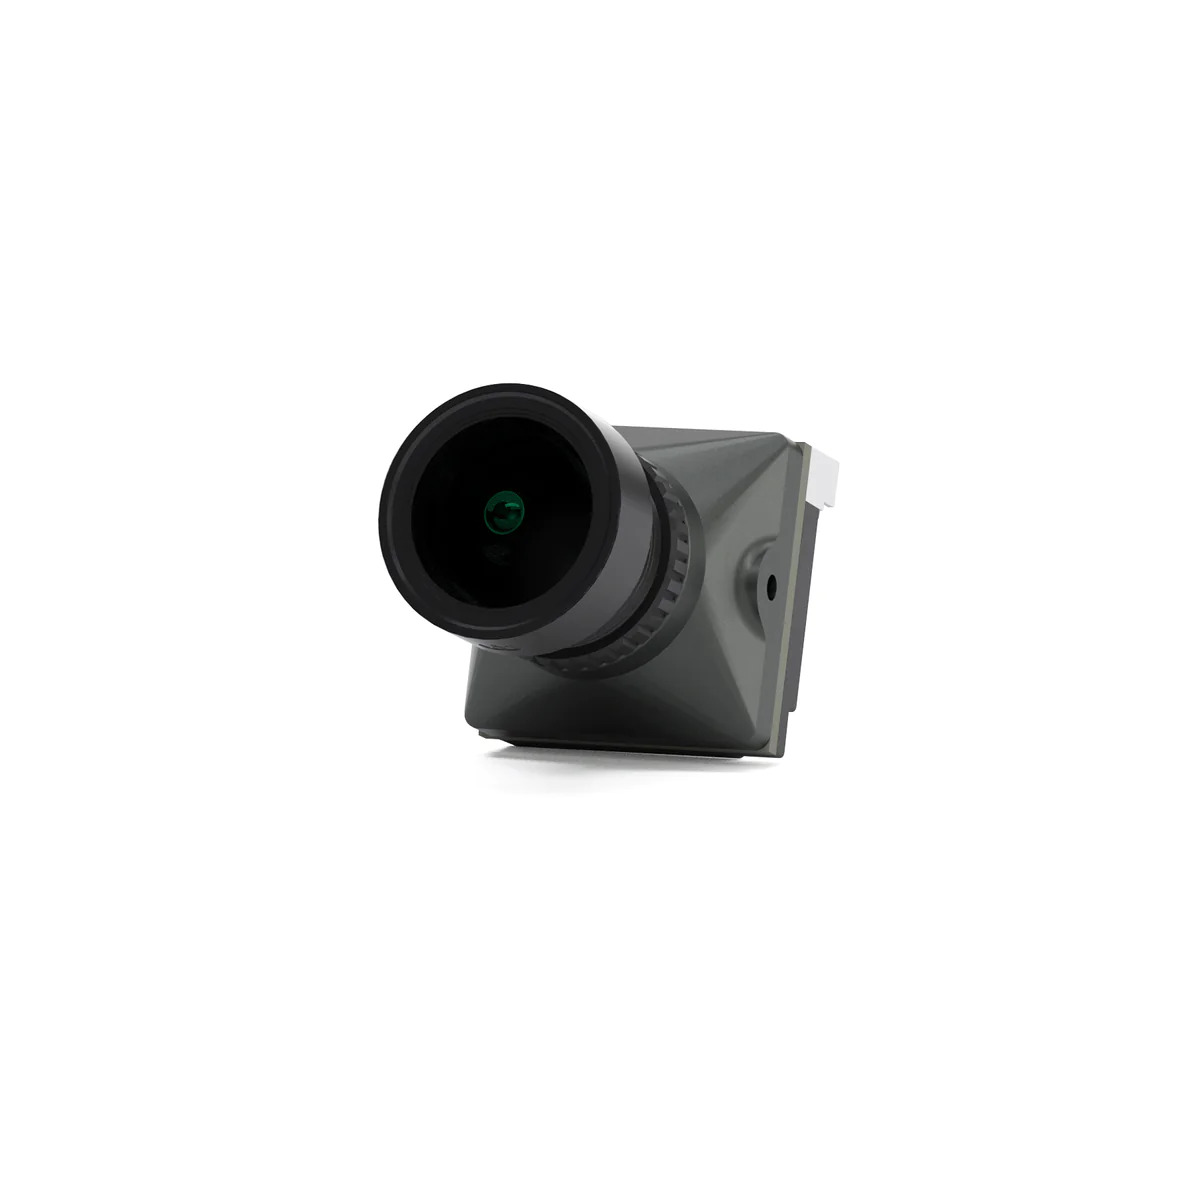 Ratel Pro Blacklight  Analog Camera